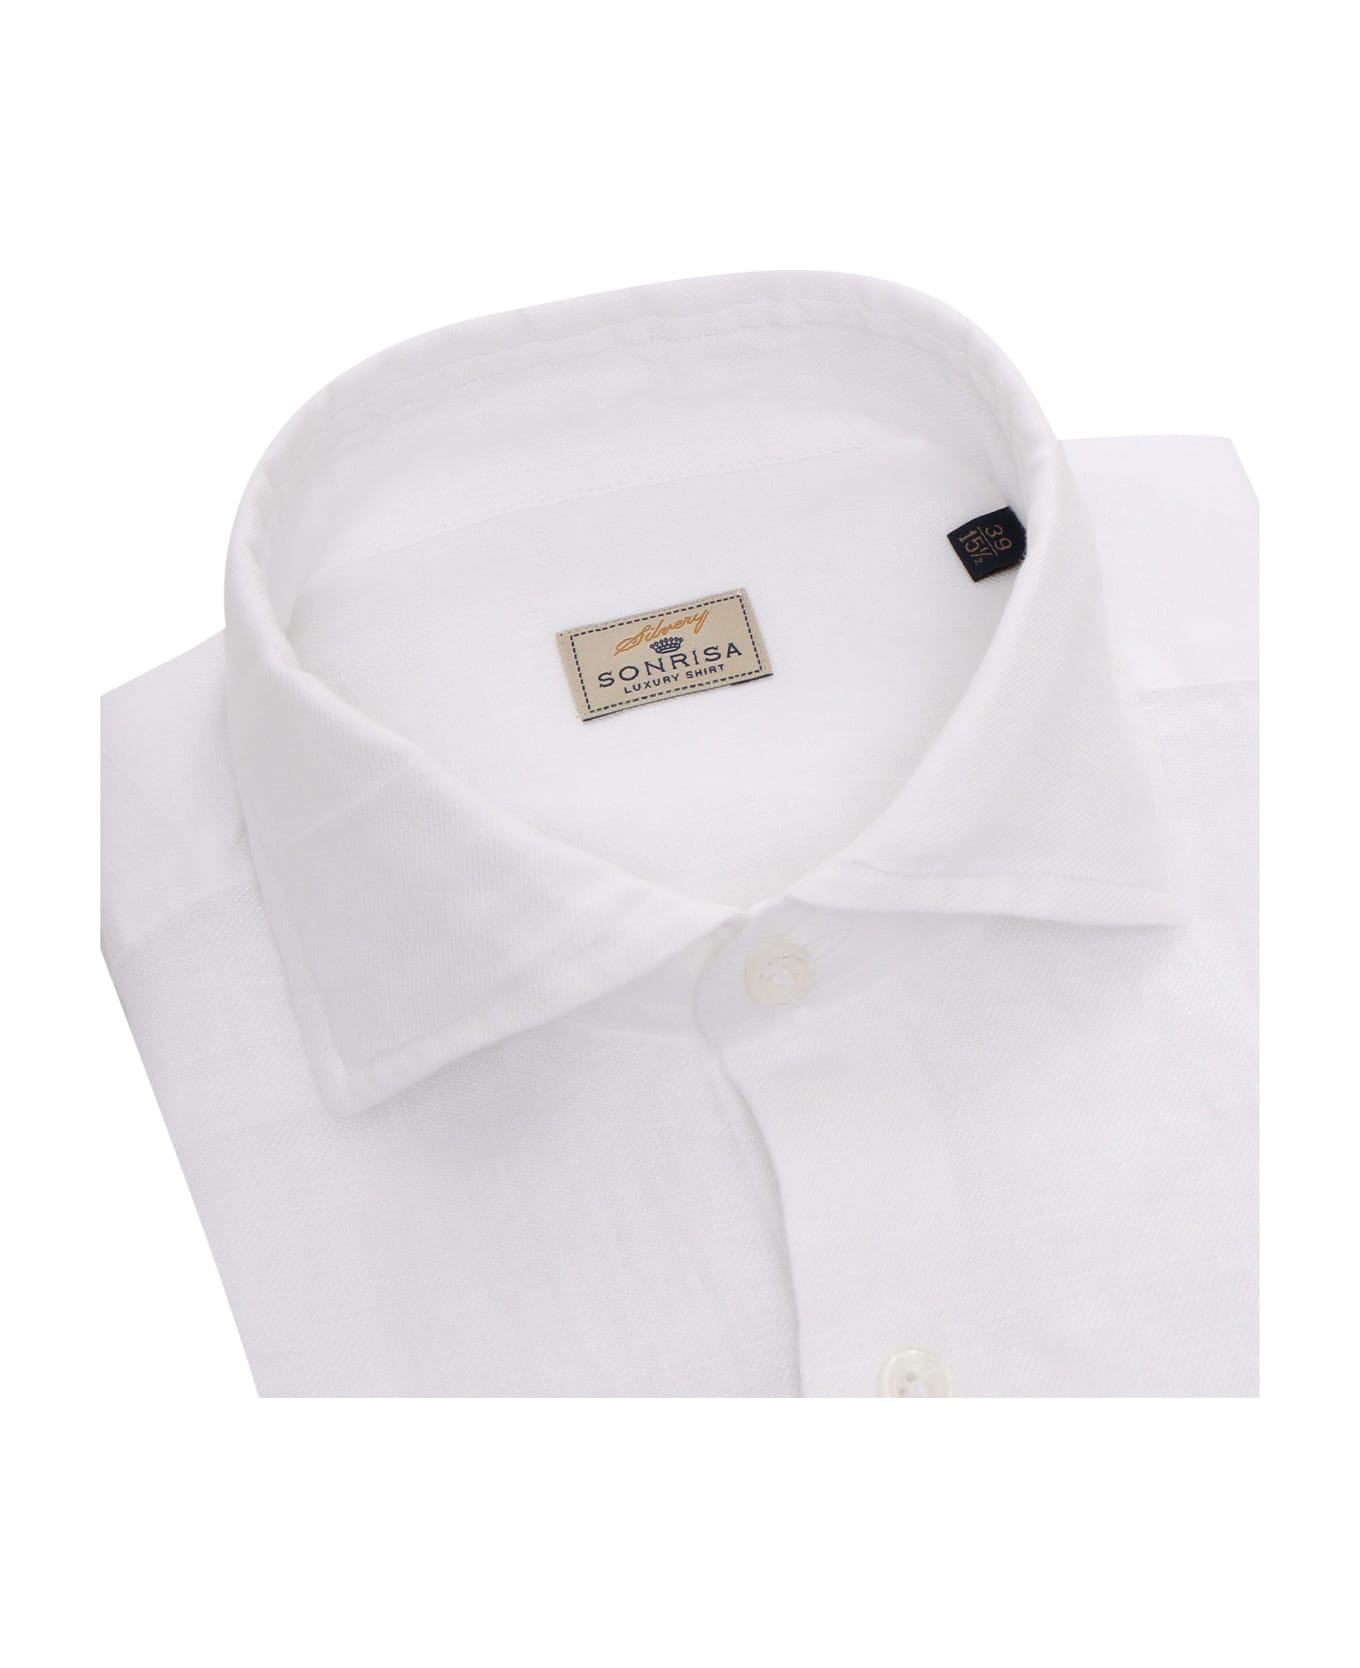 Sonrisa White Shirt - MULTICOLOR シャツ